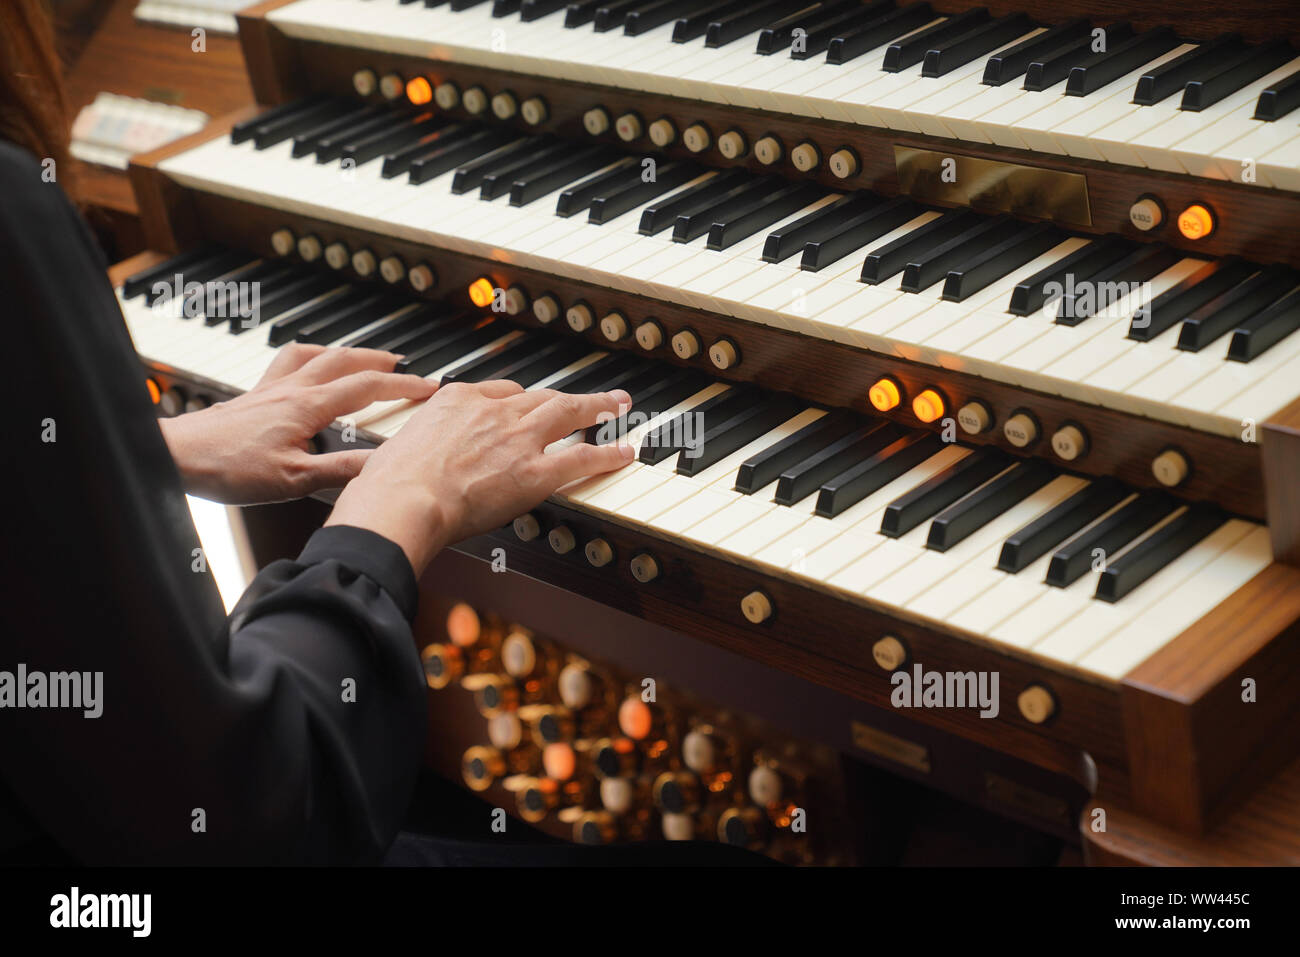 Electronic organ player Stock Photo